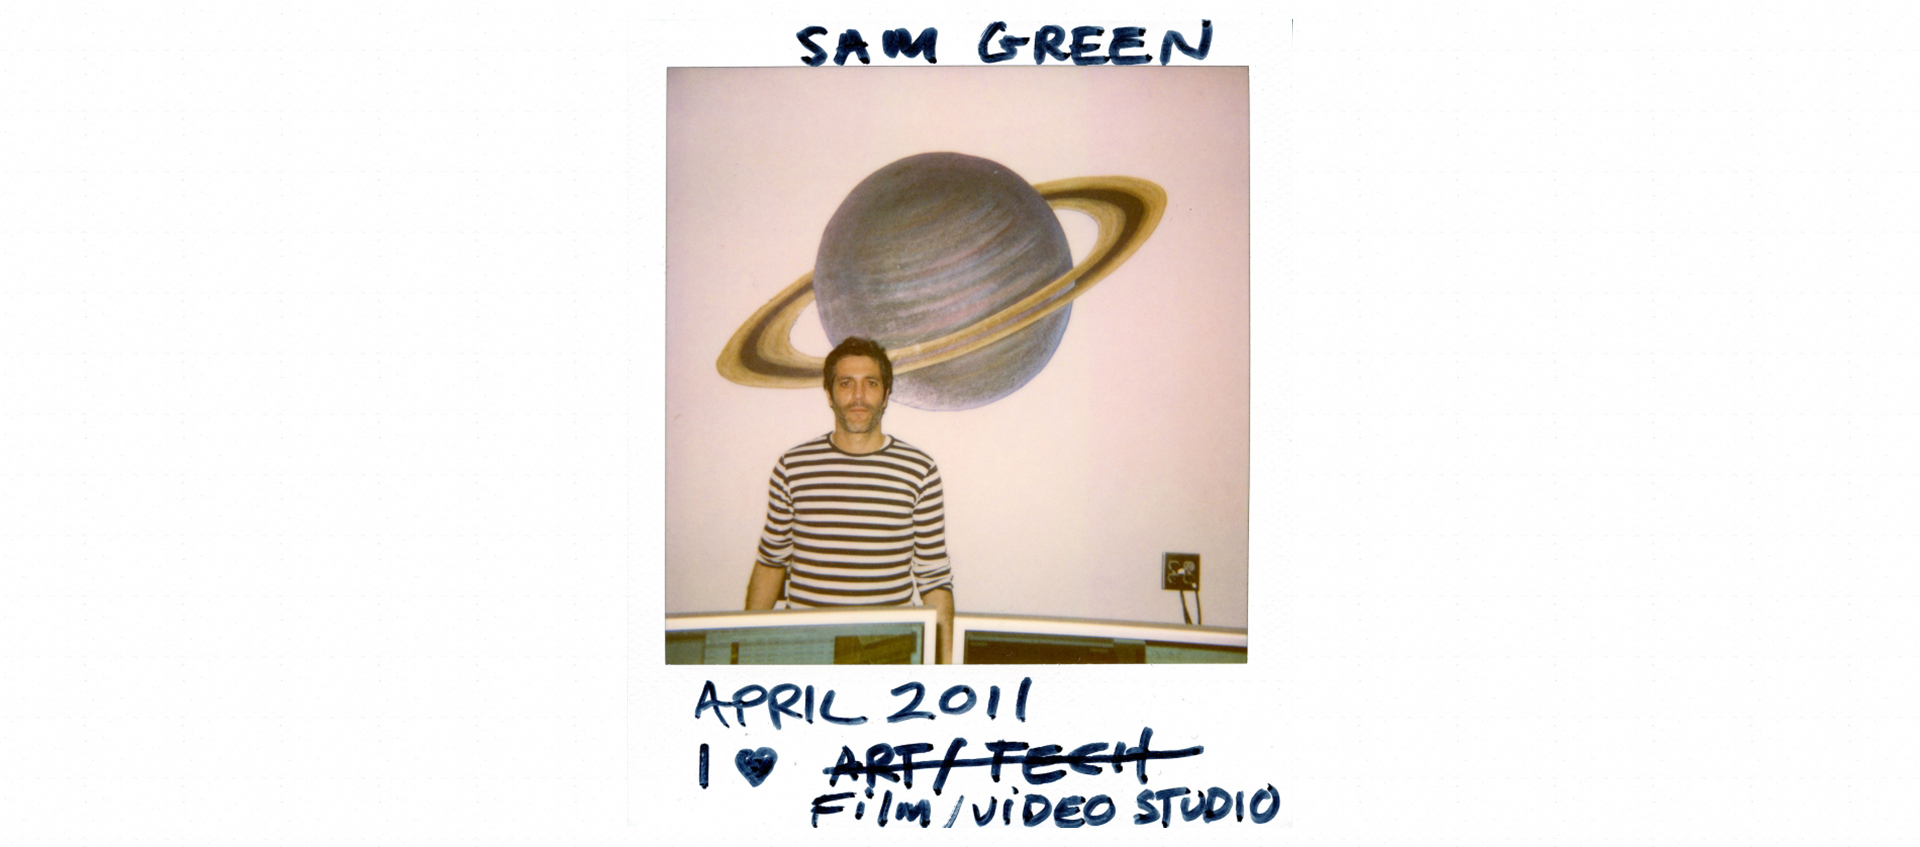 Sam green polaroid photo